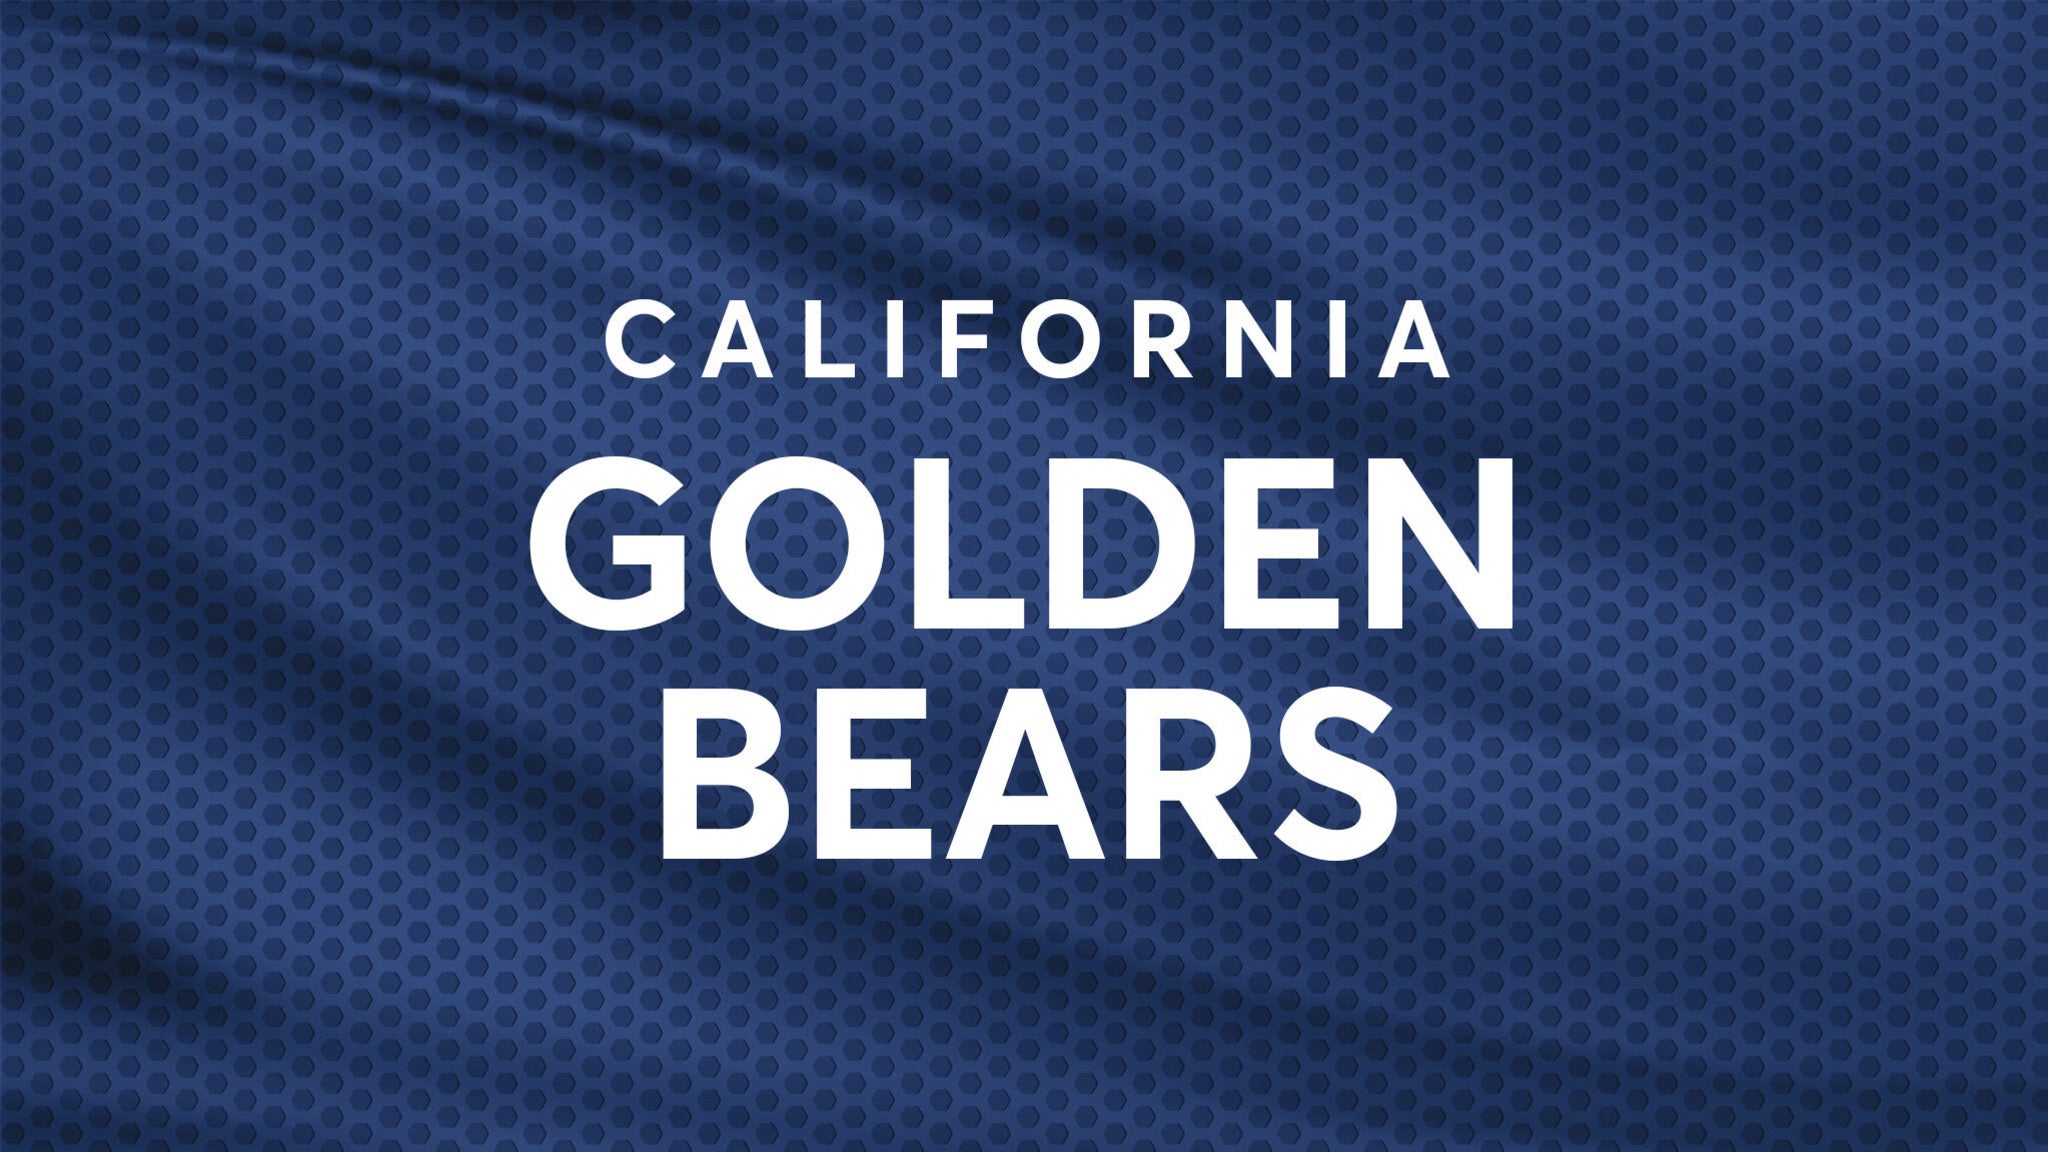 California Golden Bears Volleyball presale information on freepresalepasswords.com